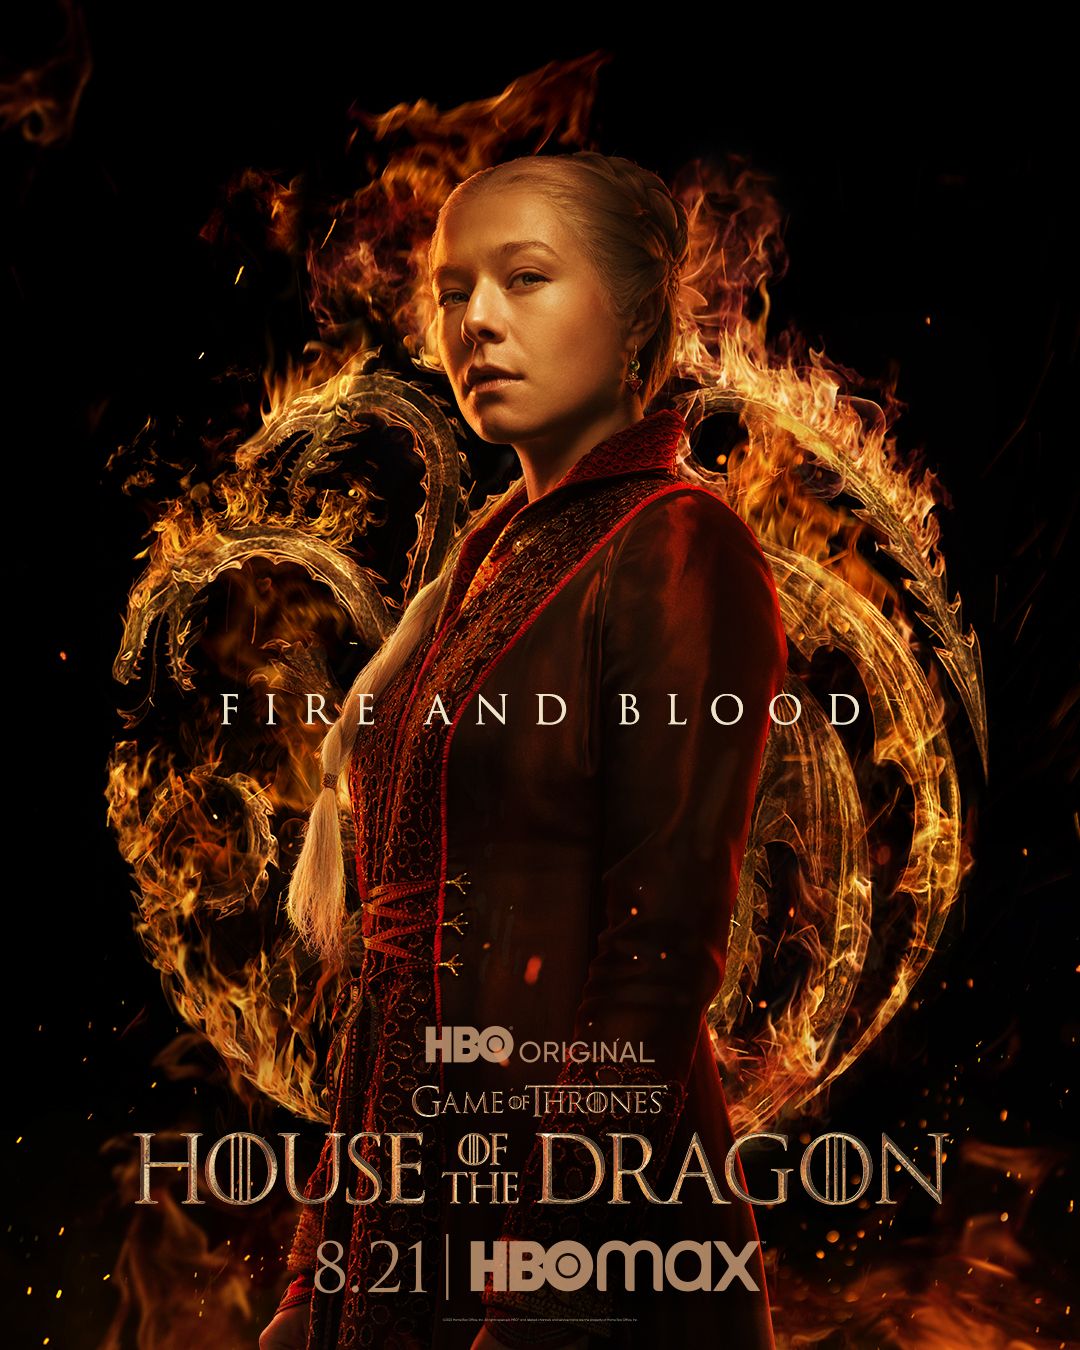 Rhaenyra Targaryen in House of the Dragon poster